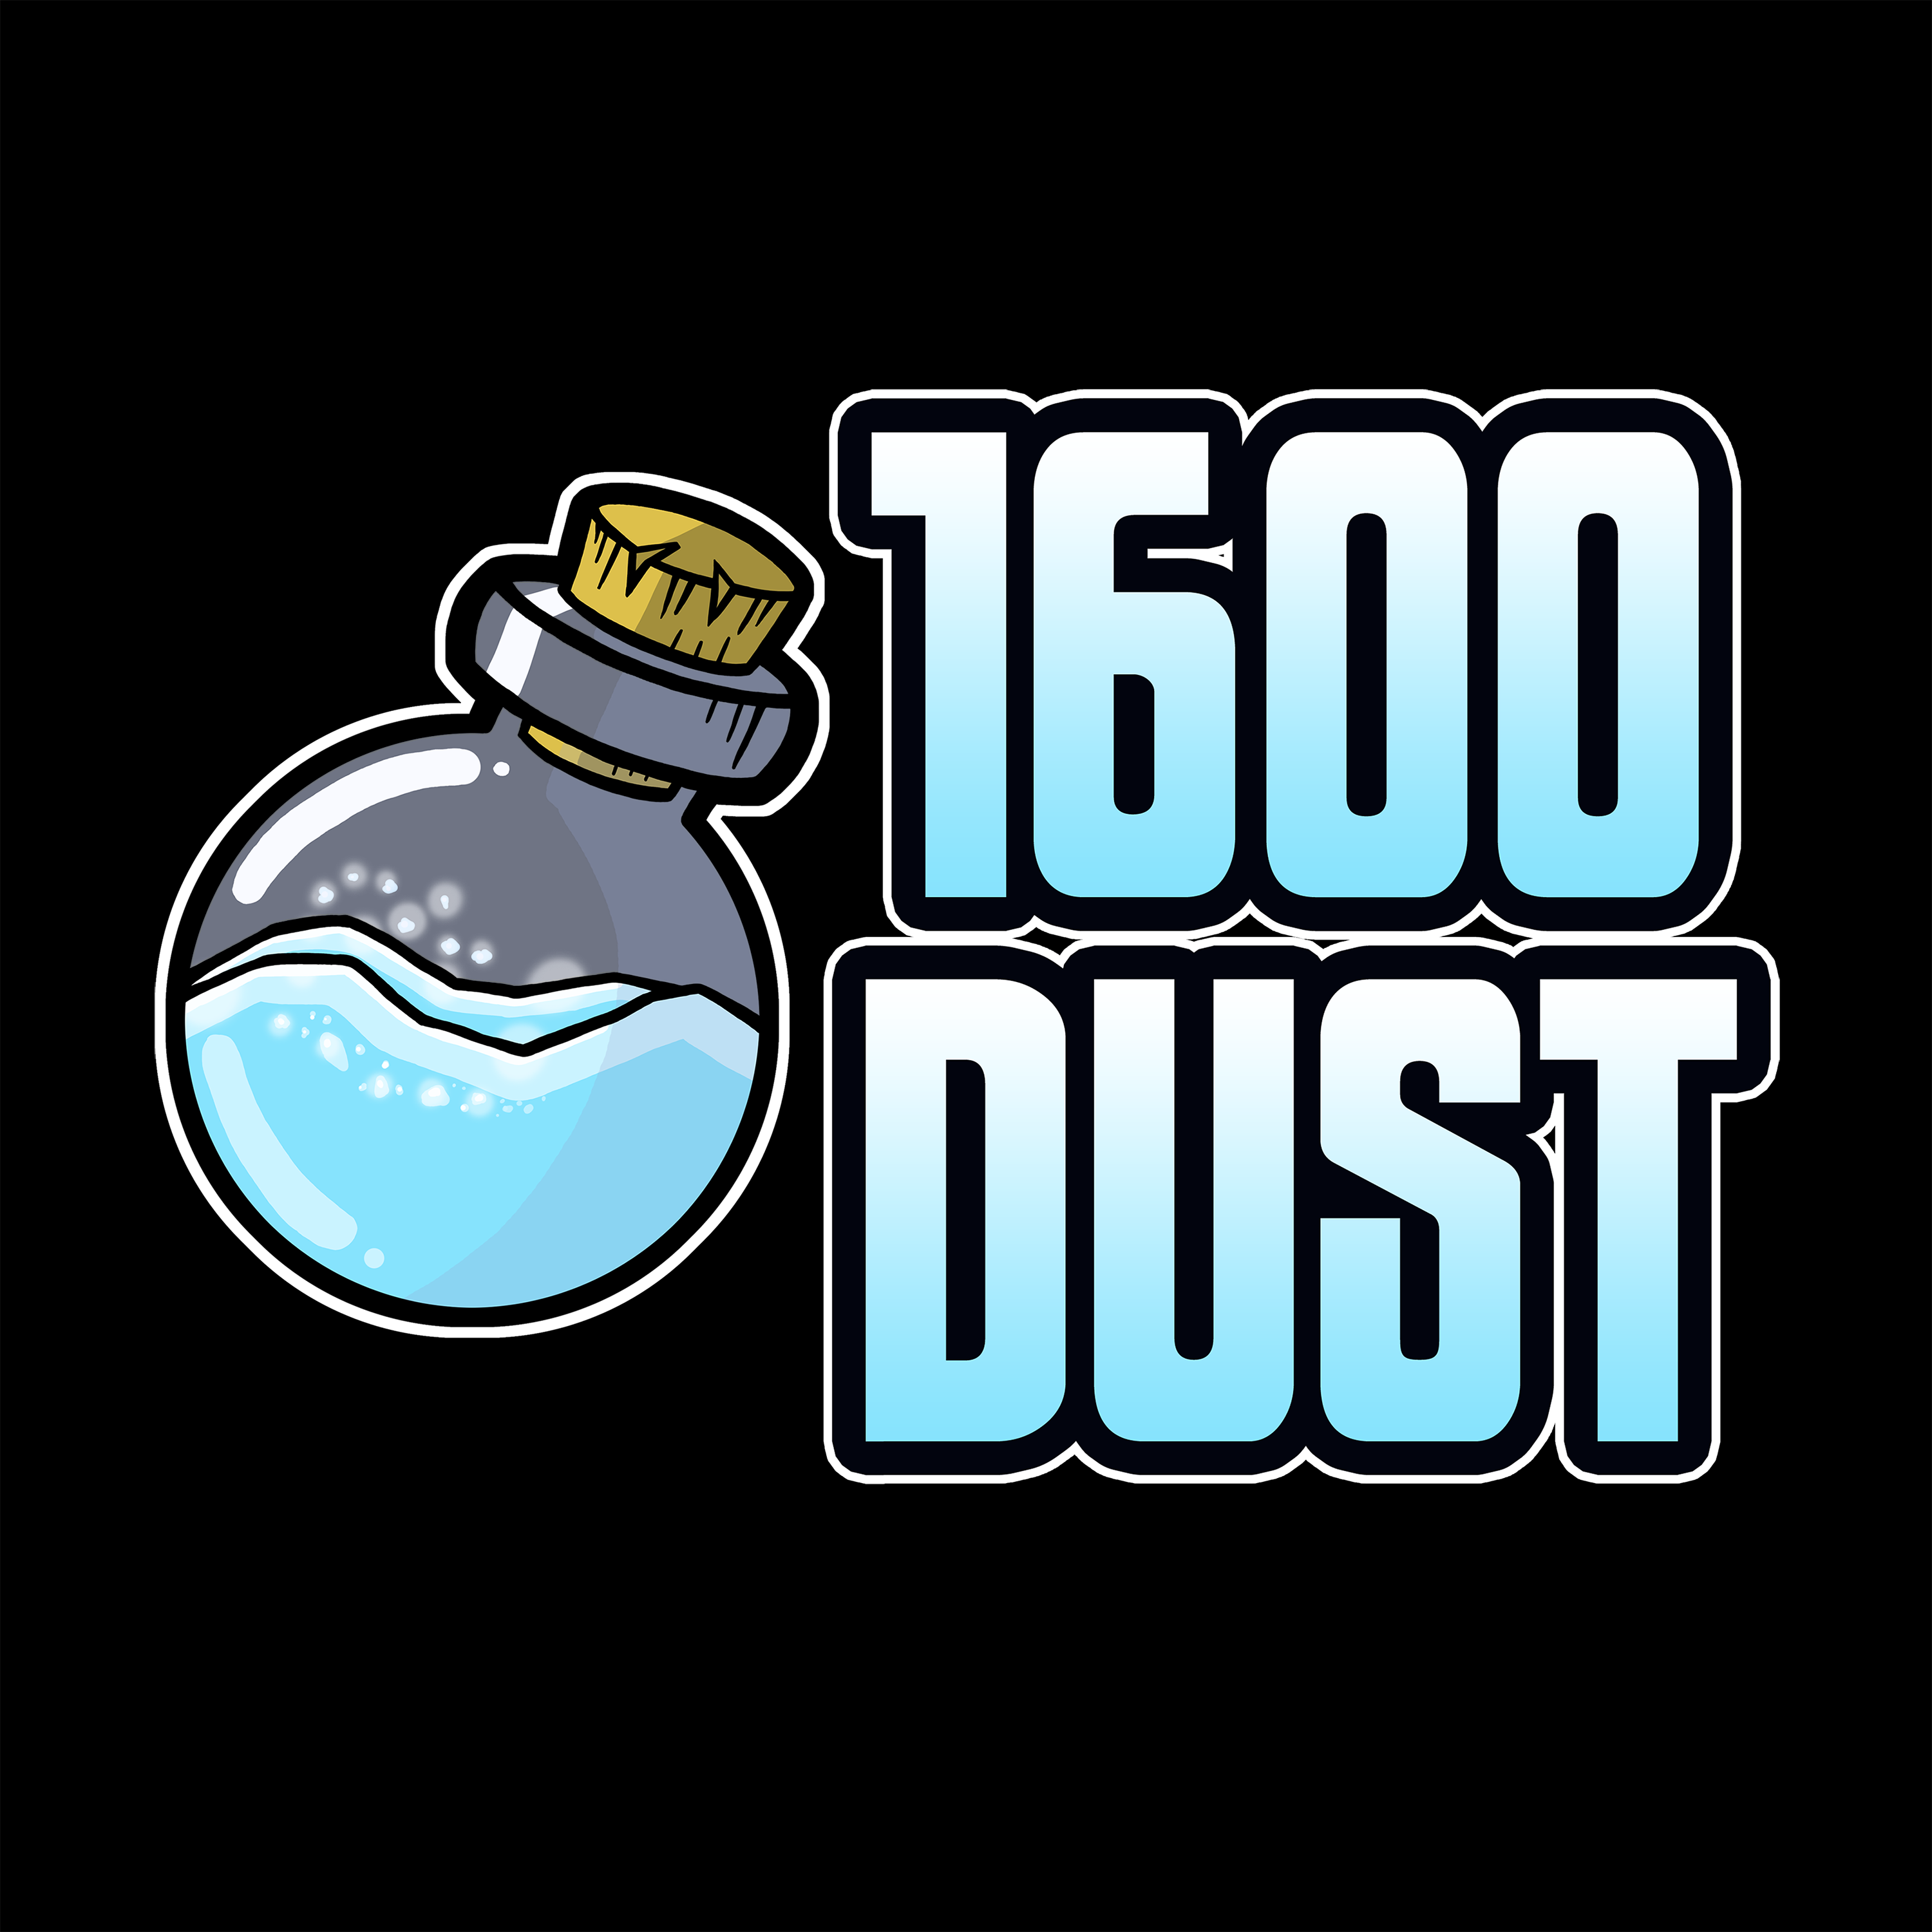 1600 Dust